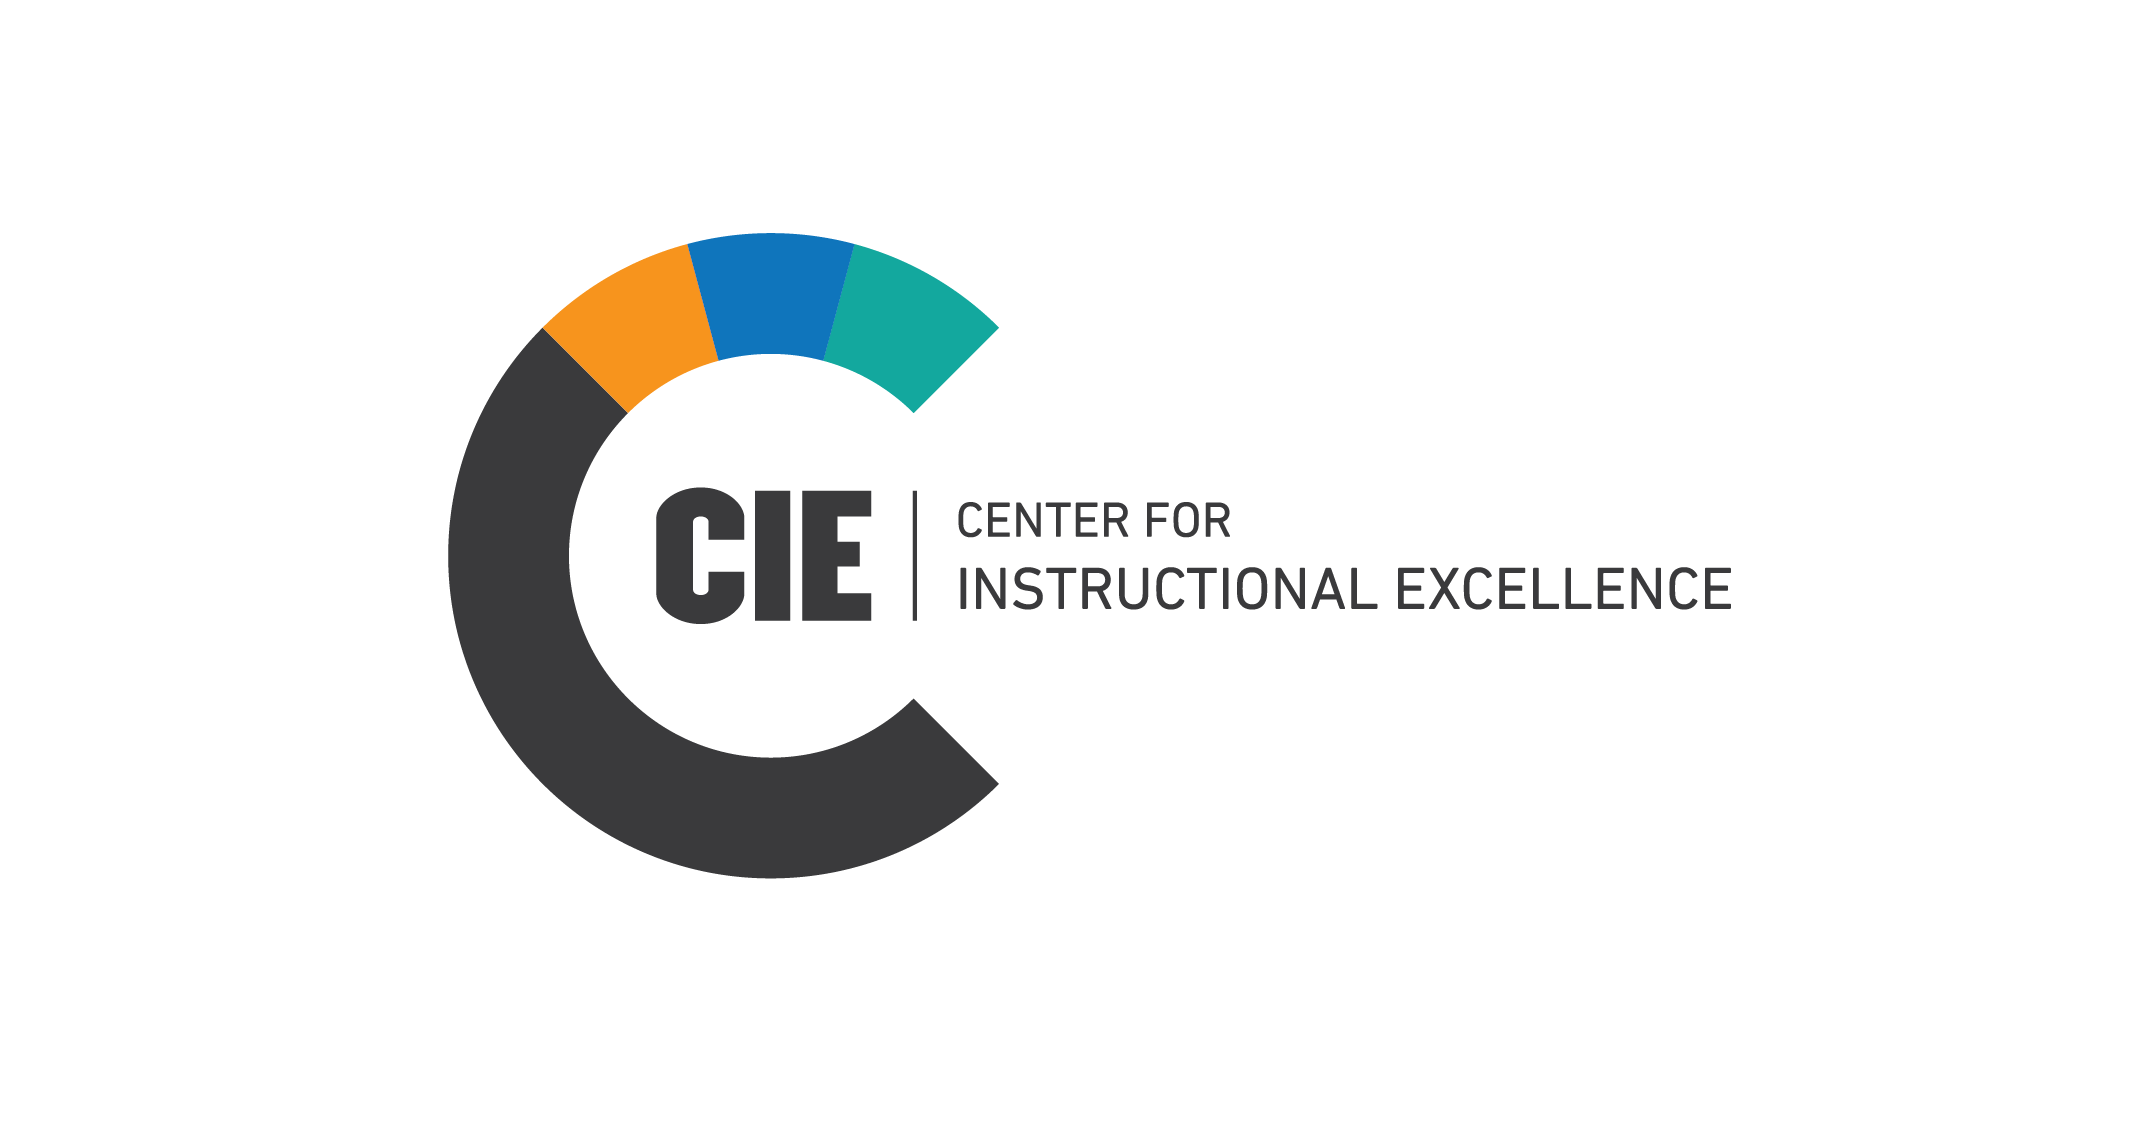 CIE Logo - Center for Instructional Excellence